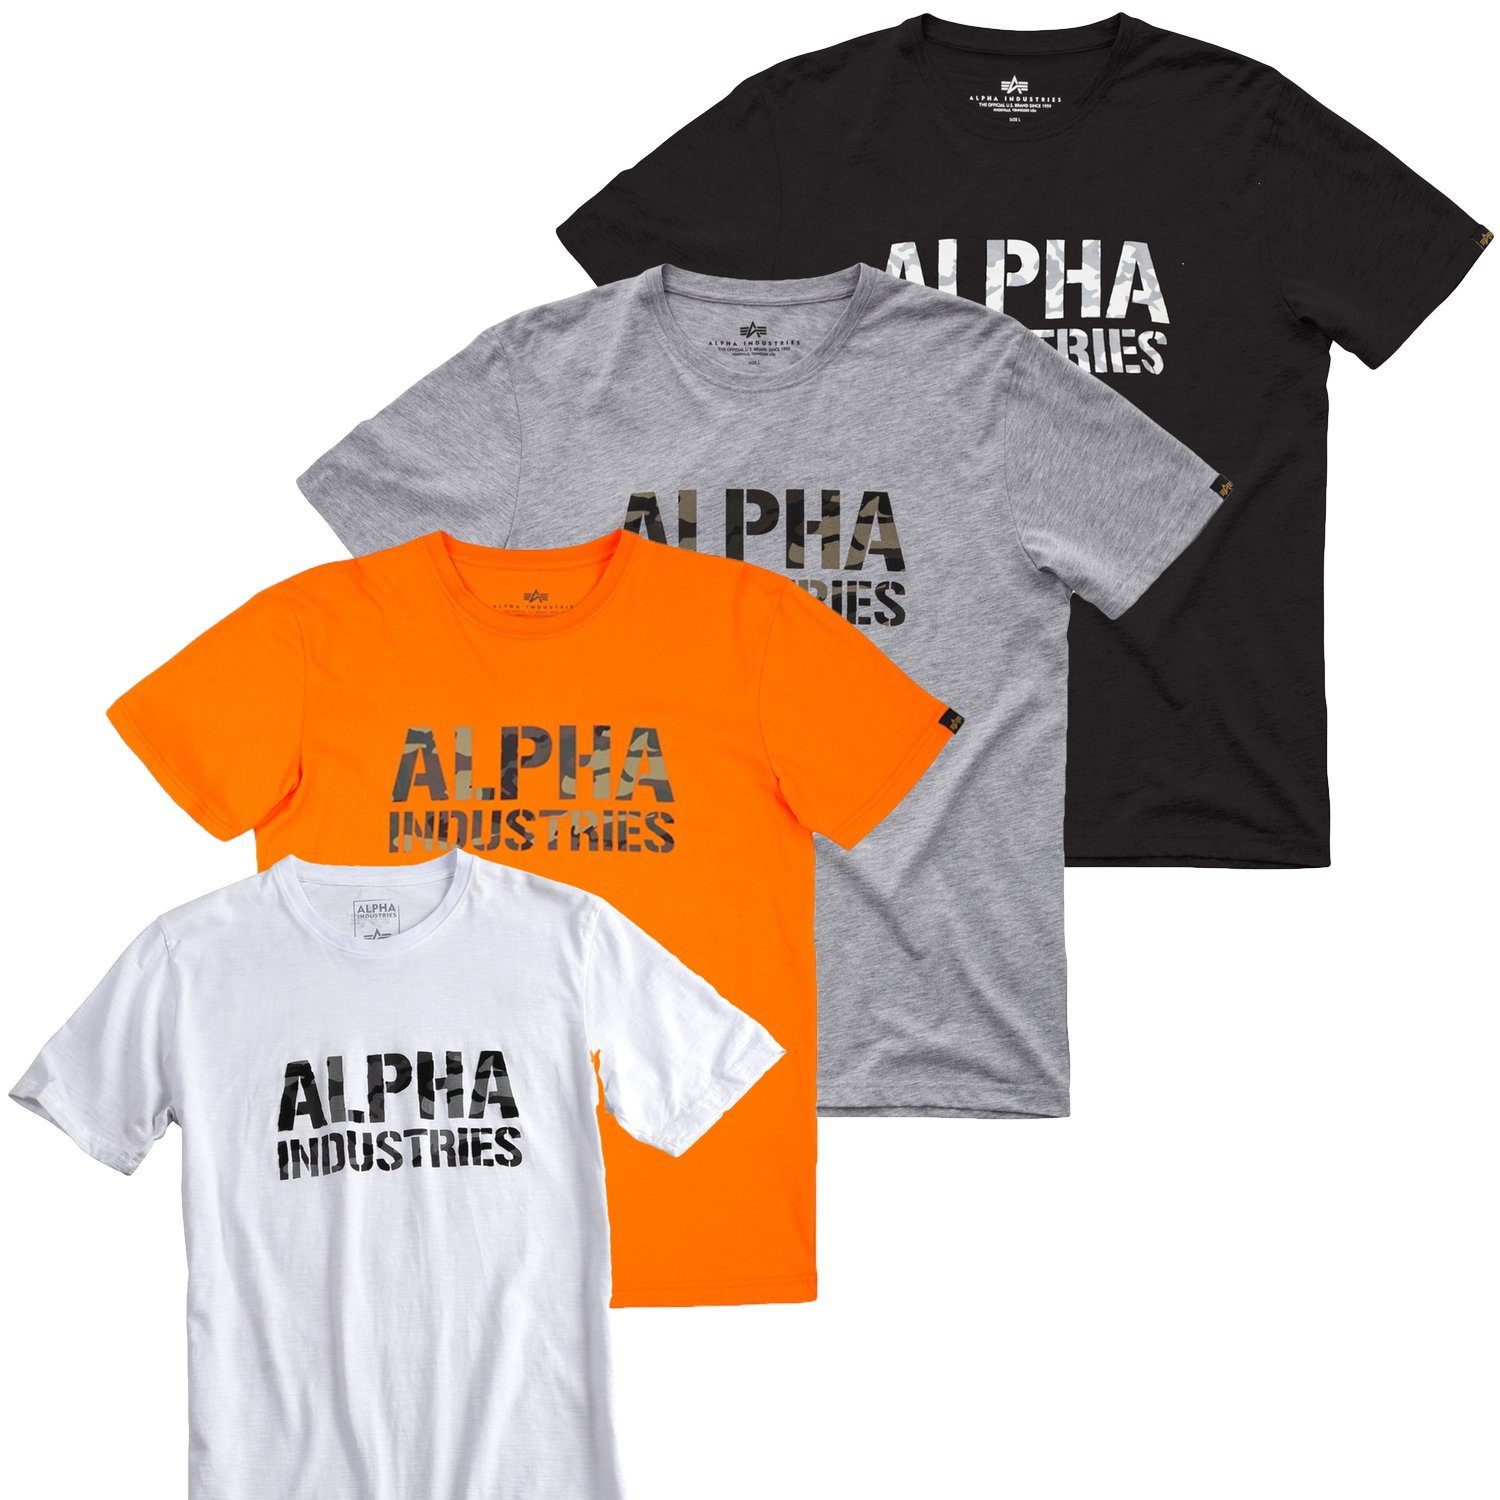 T-Shirt T-Shirt Alpha Adult Print Industries Alpha white/digi camo Camo black T Industries